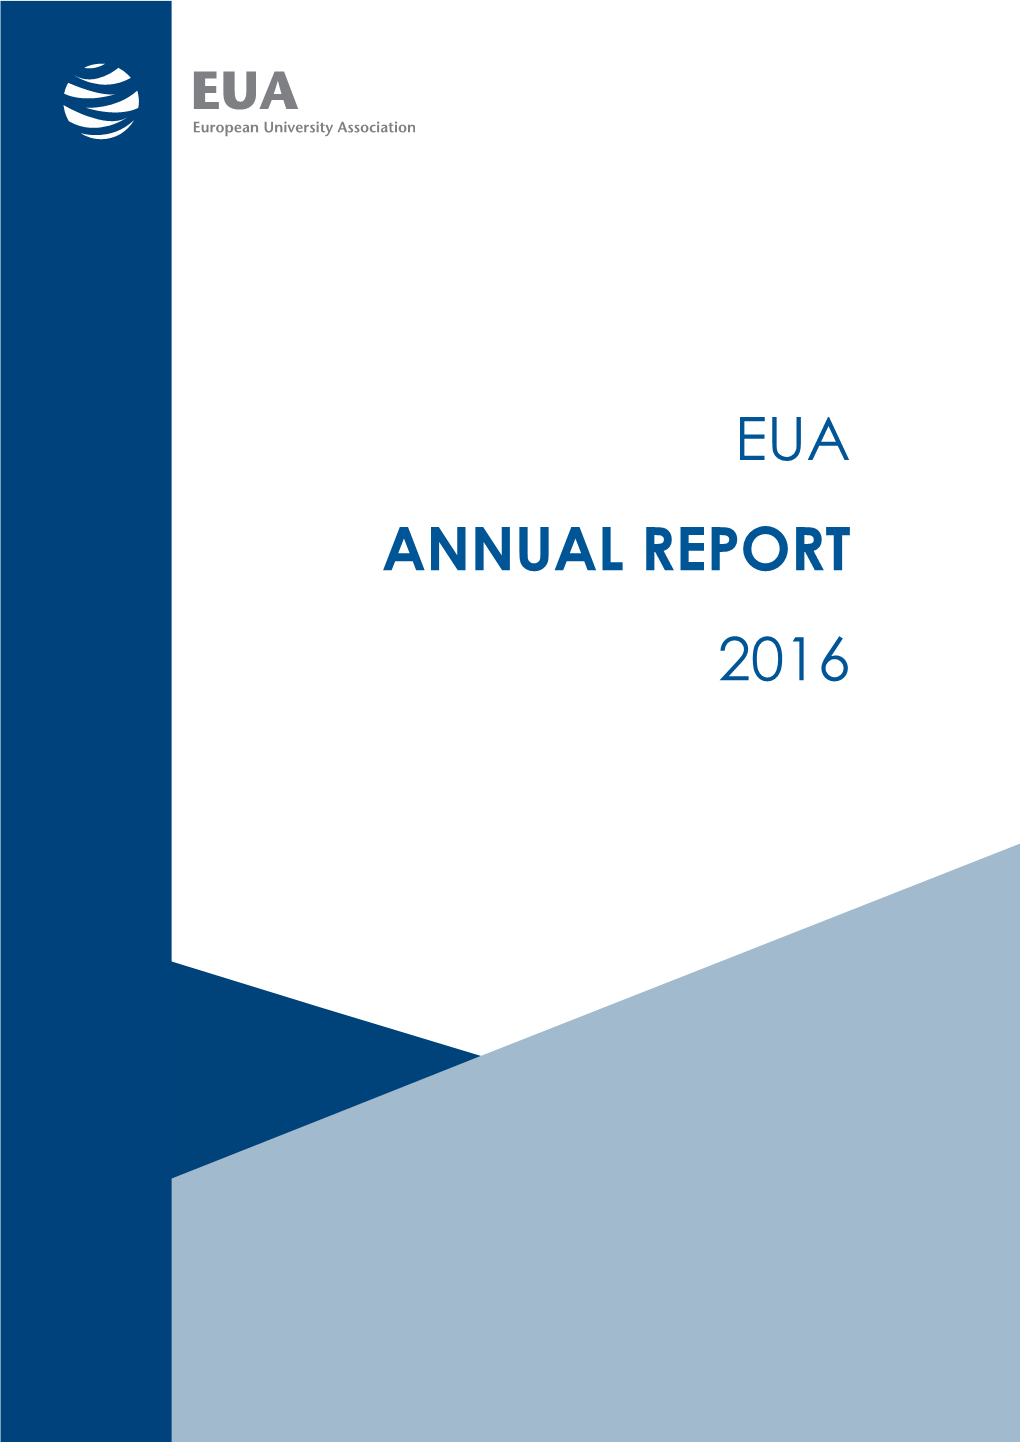 EUA Annual Report 2016 Copyright © European University Association 2017